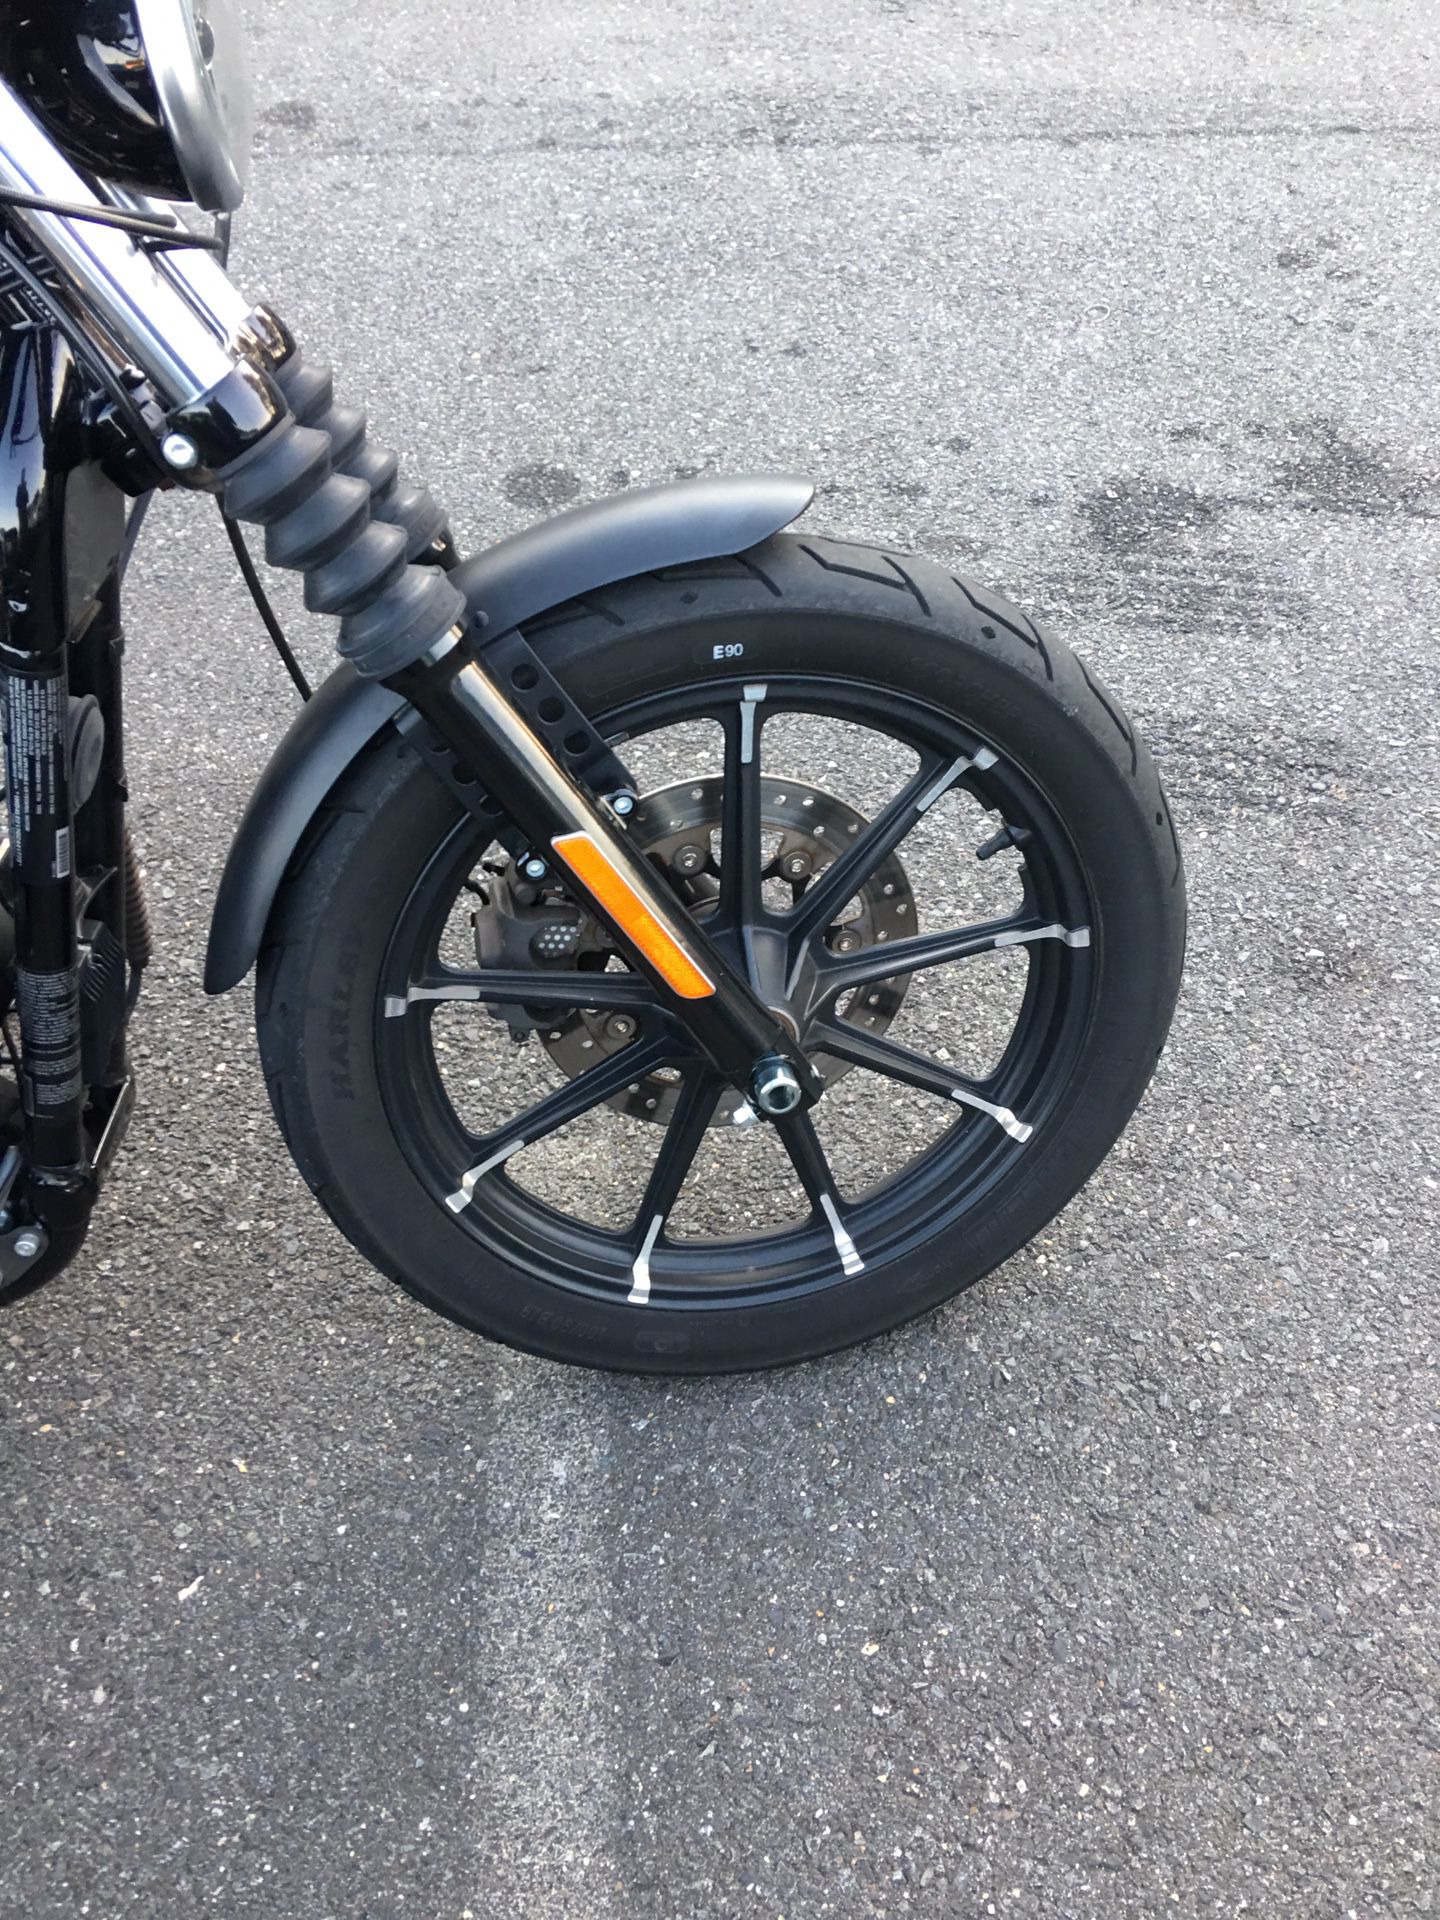 2016 Harley Davidson 883 iron